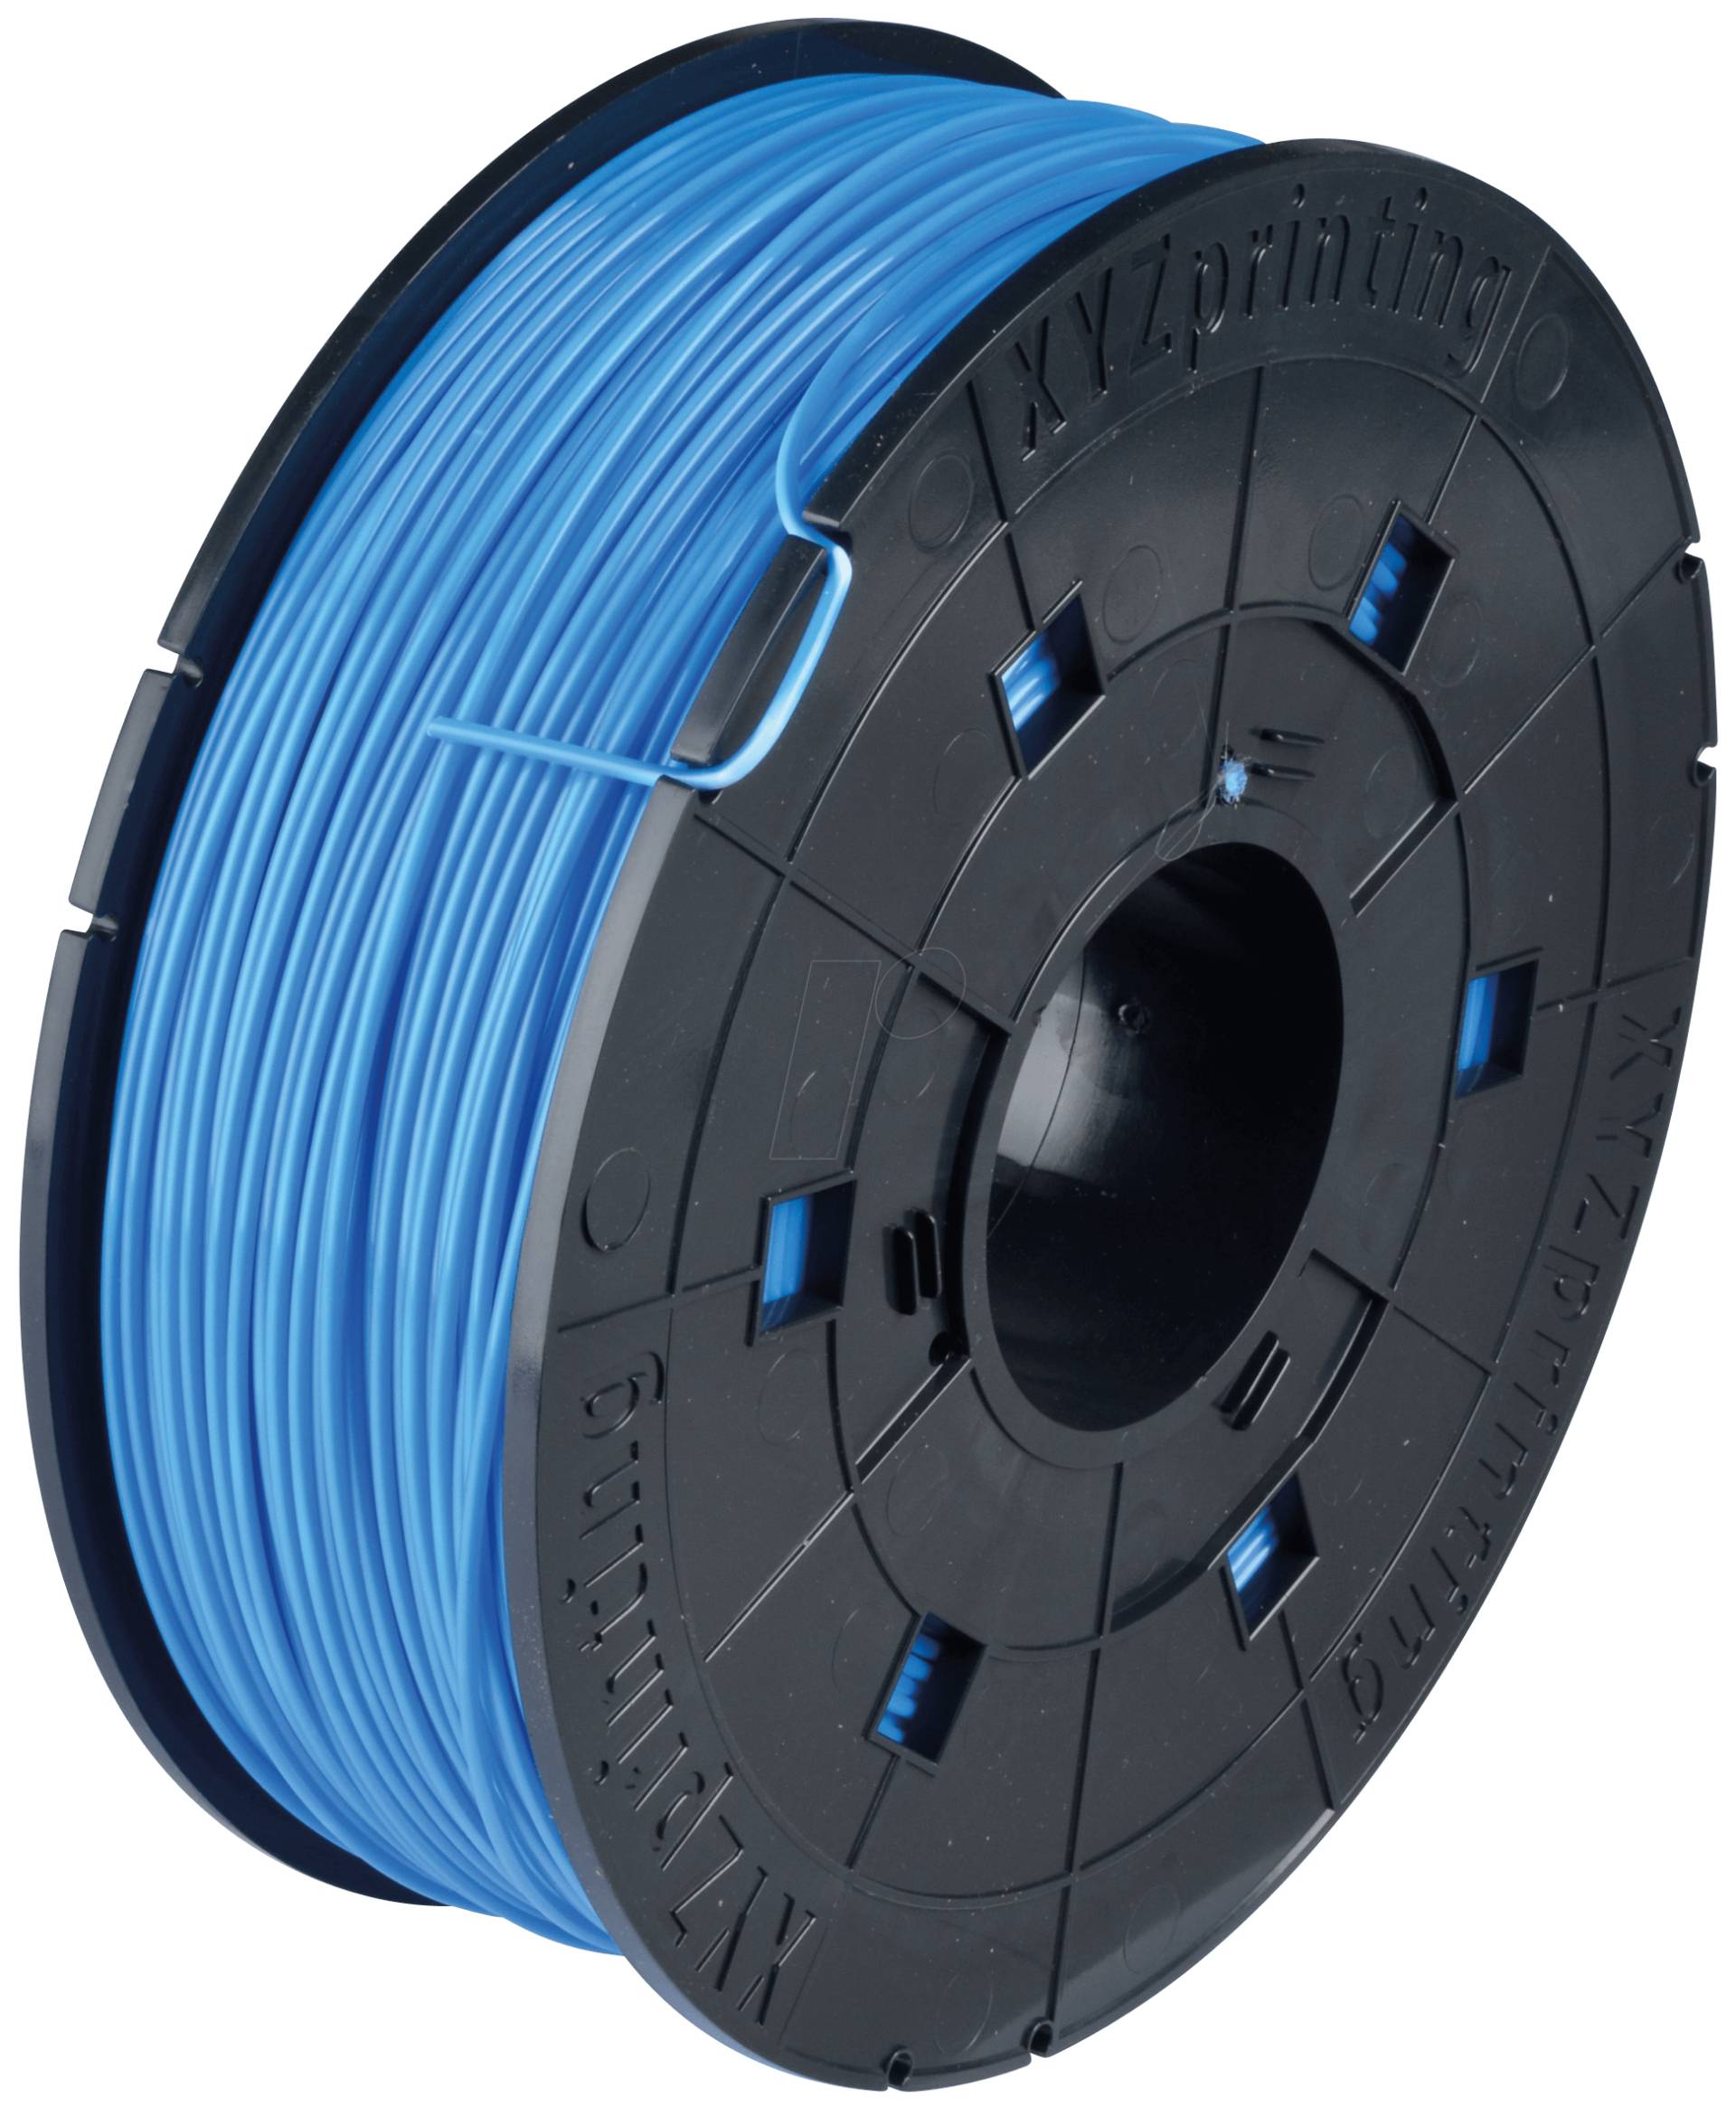 ABS XYZ BL REF - ABS Filament - blau - 600 g - Refill von XYZprinting